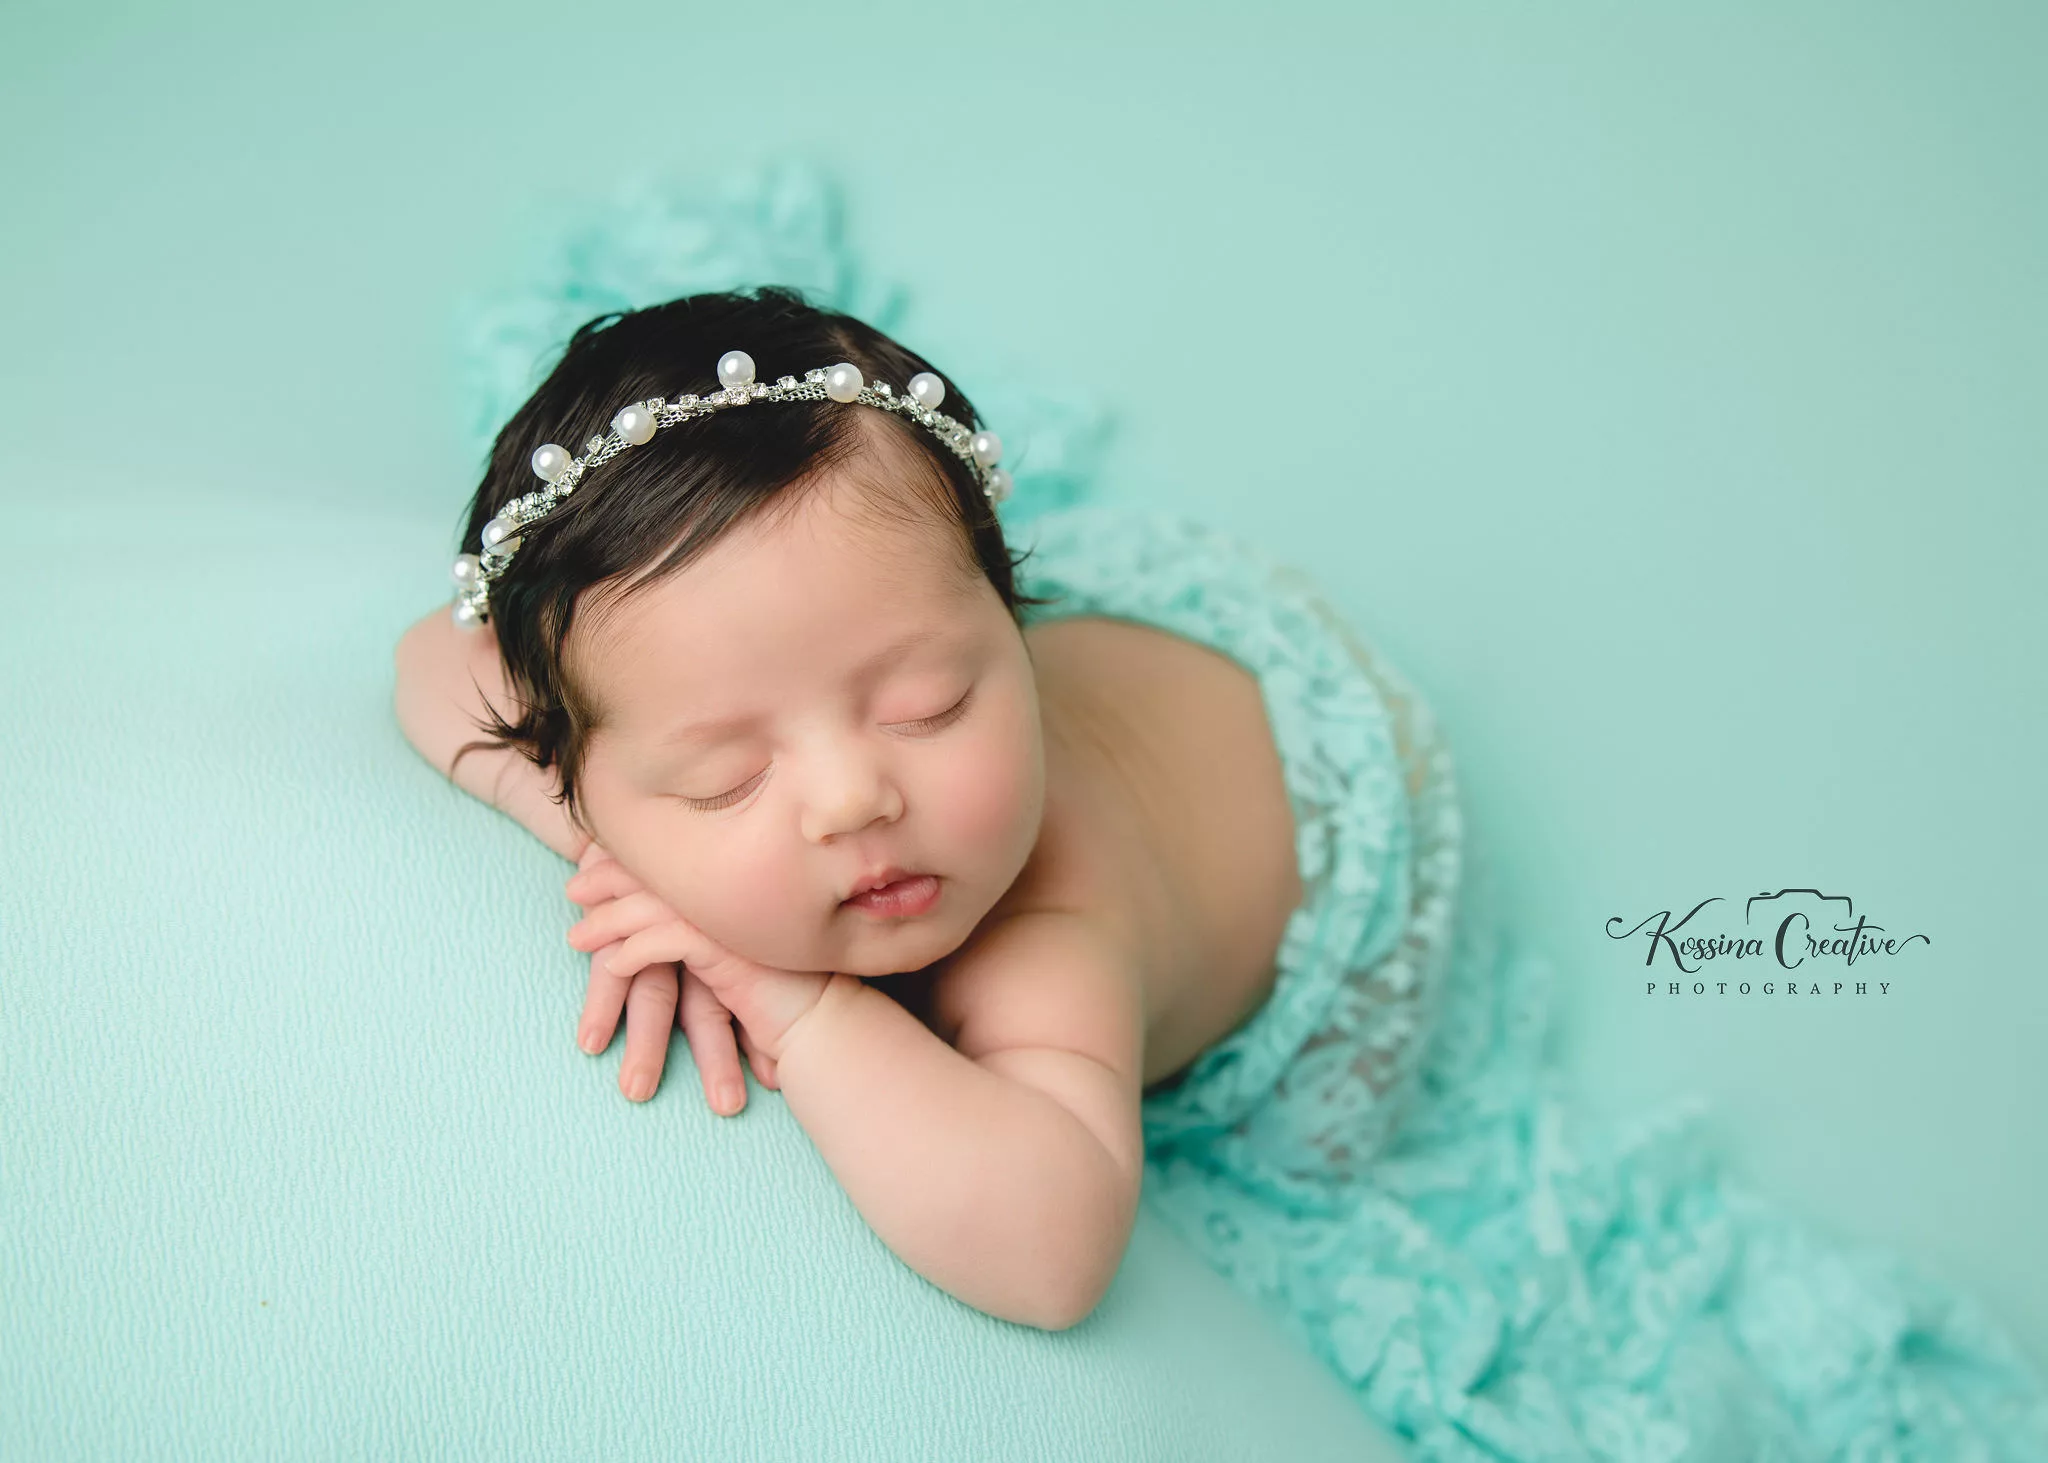 Orlando Newborn Photographer Baby Girl Photo studio sleeping teal on teal pearl headband